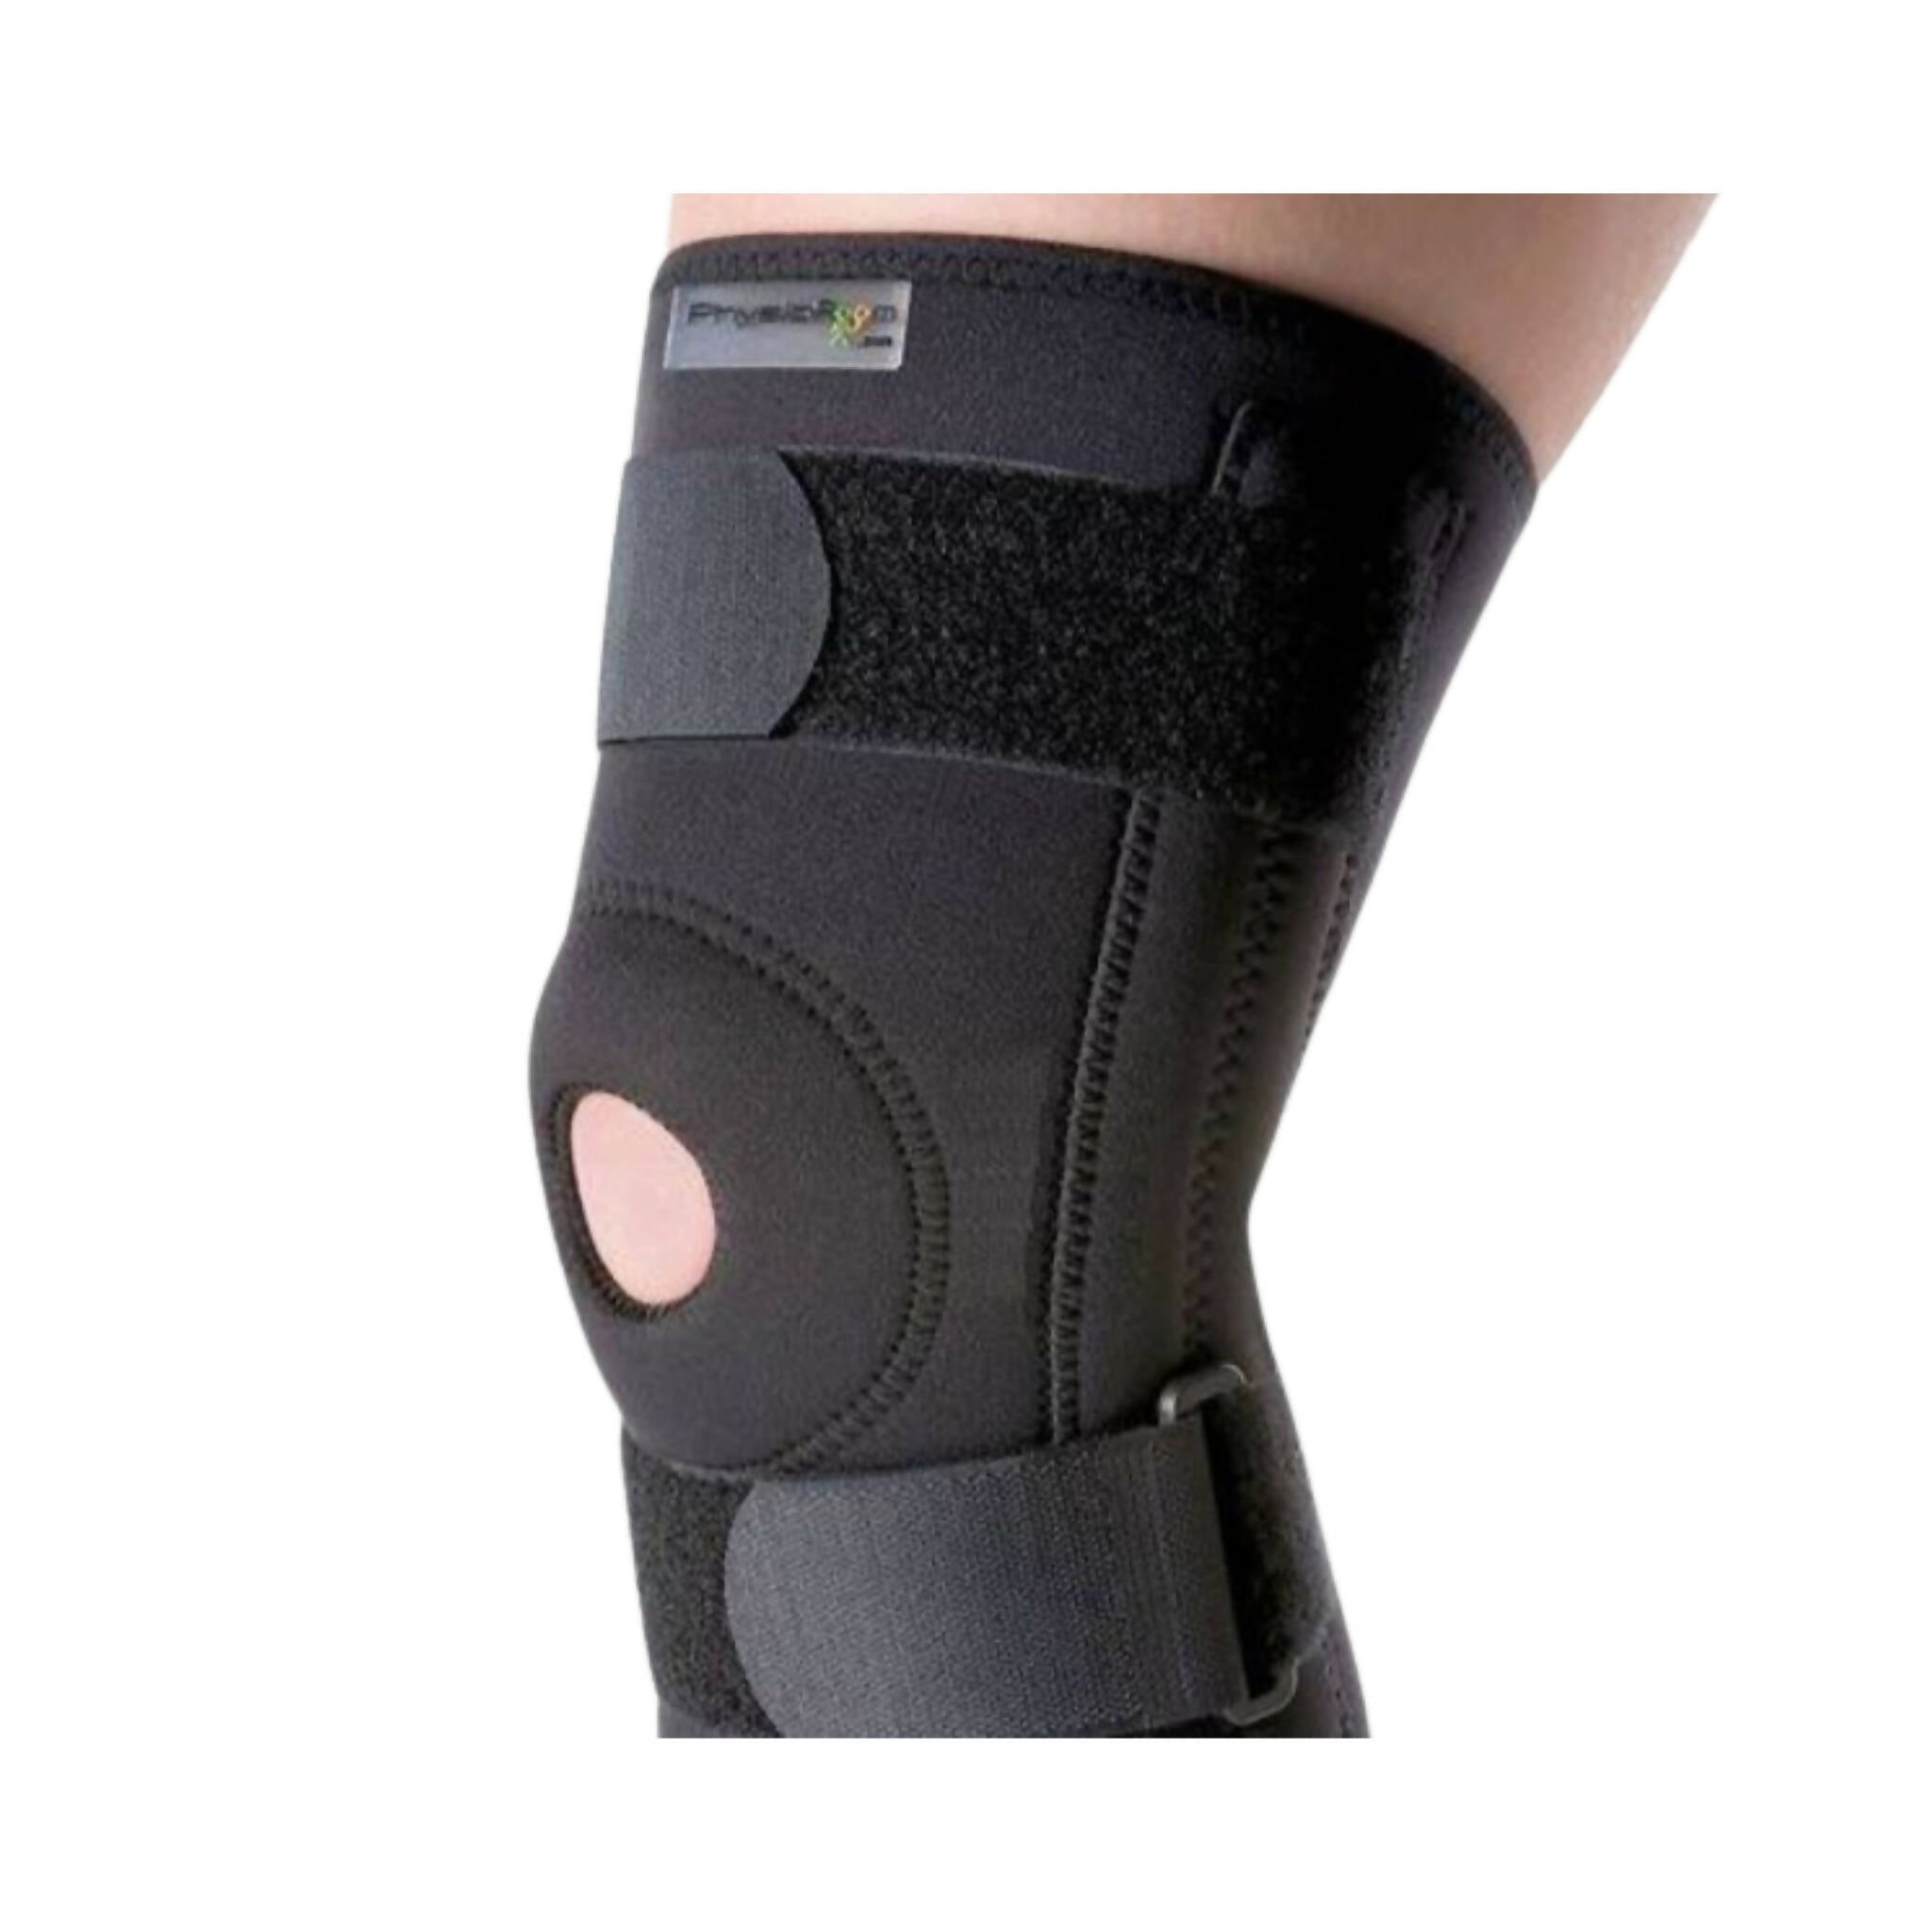 Knee Brace, Side Stabilizers & Patella Gel, for Knee Support